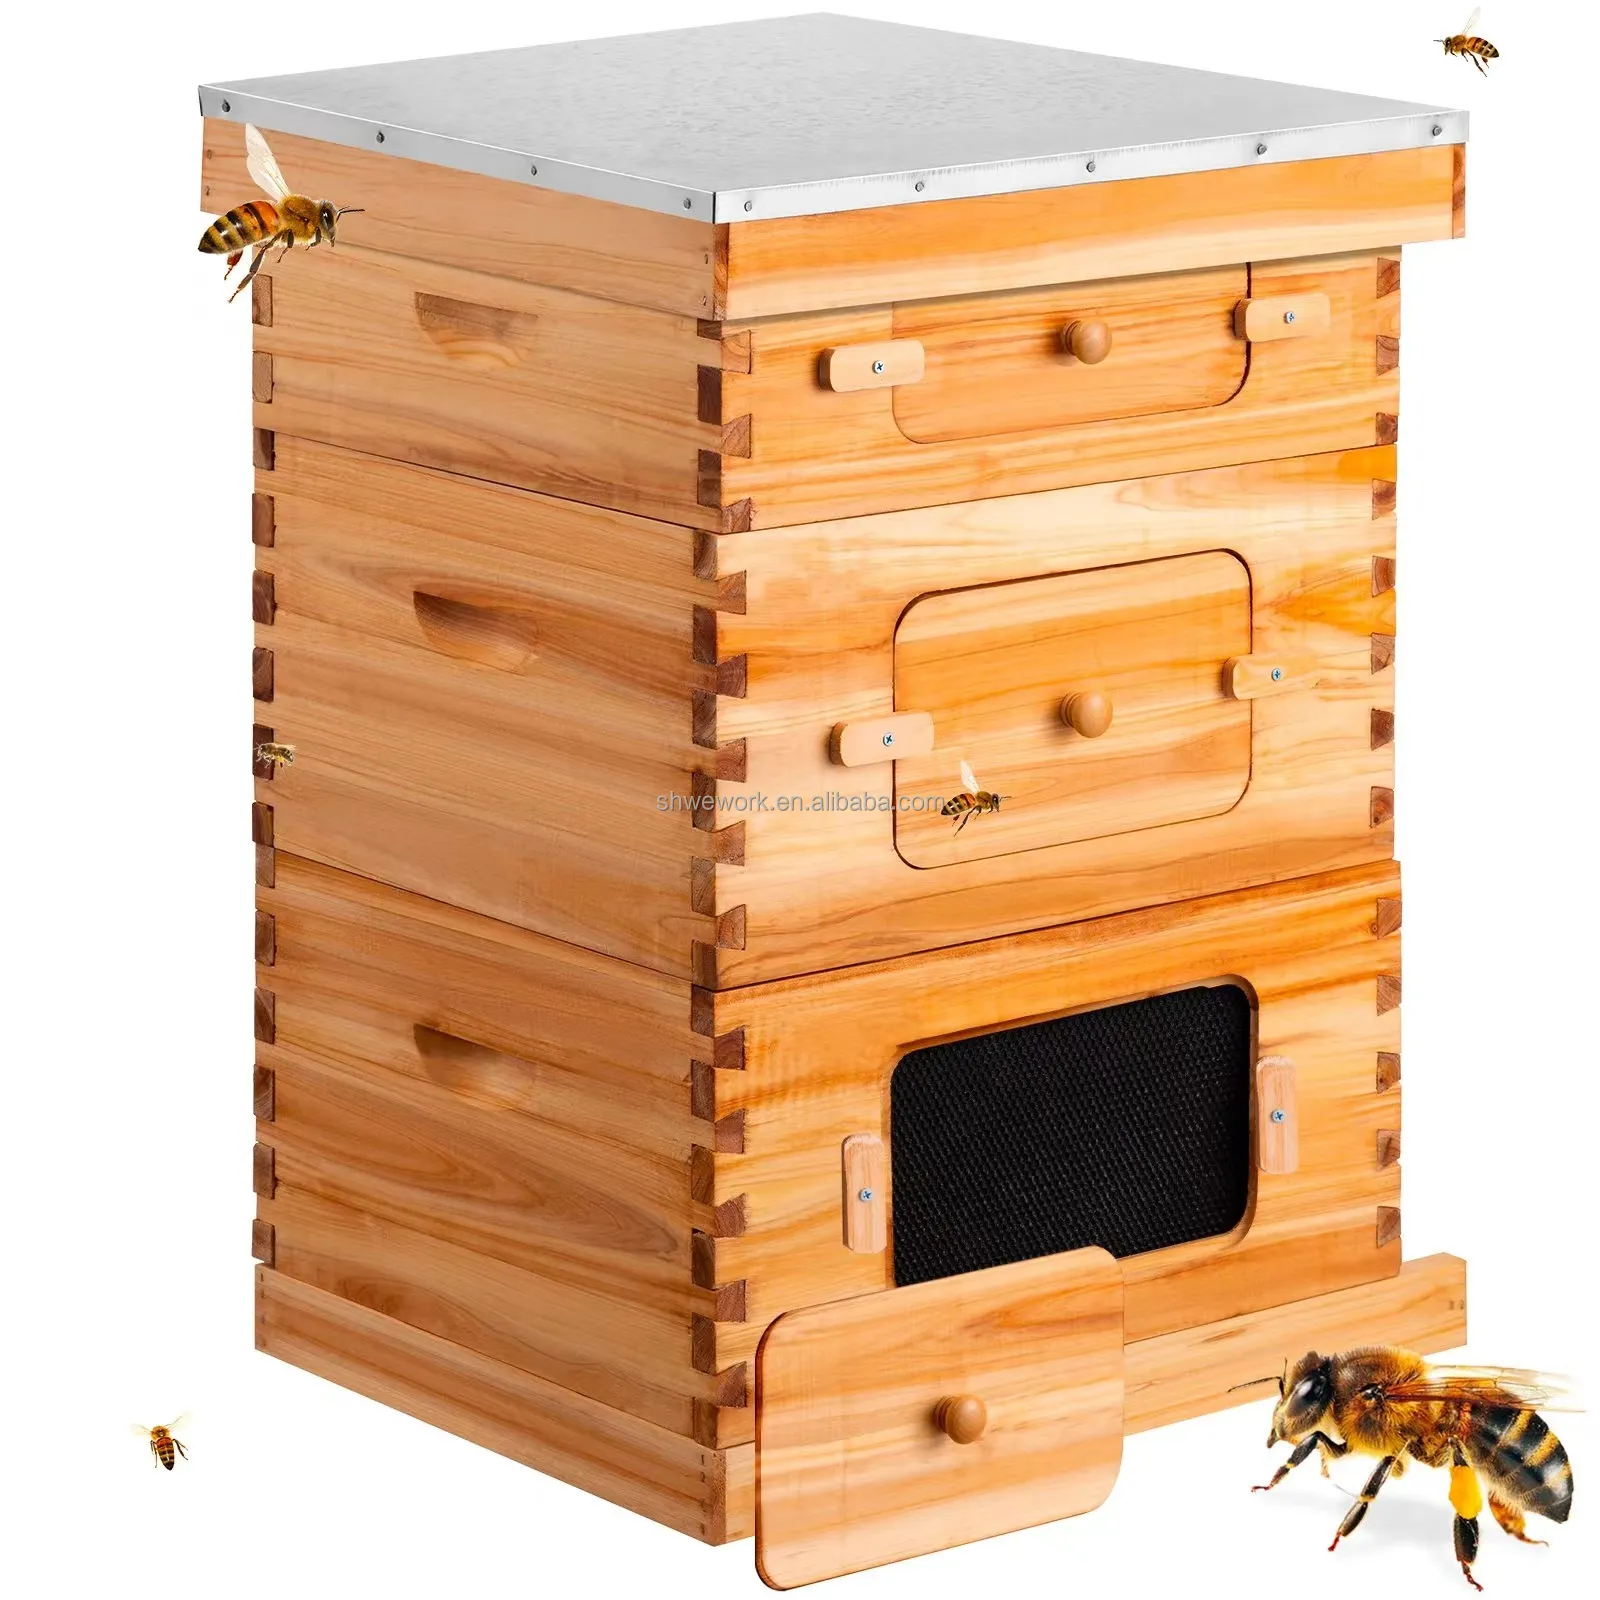 WeWork Großhandel Bienenstöcke Imkerei Werkzeuge Api cultura Bienen kasten Bienenstock Kit